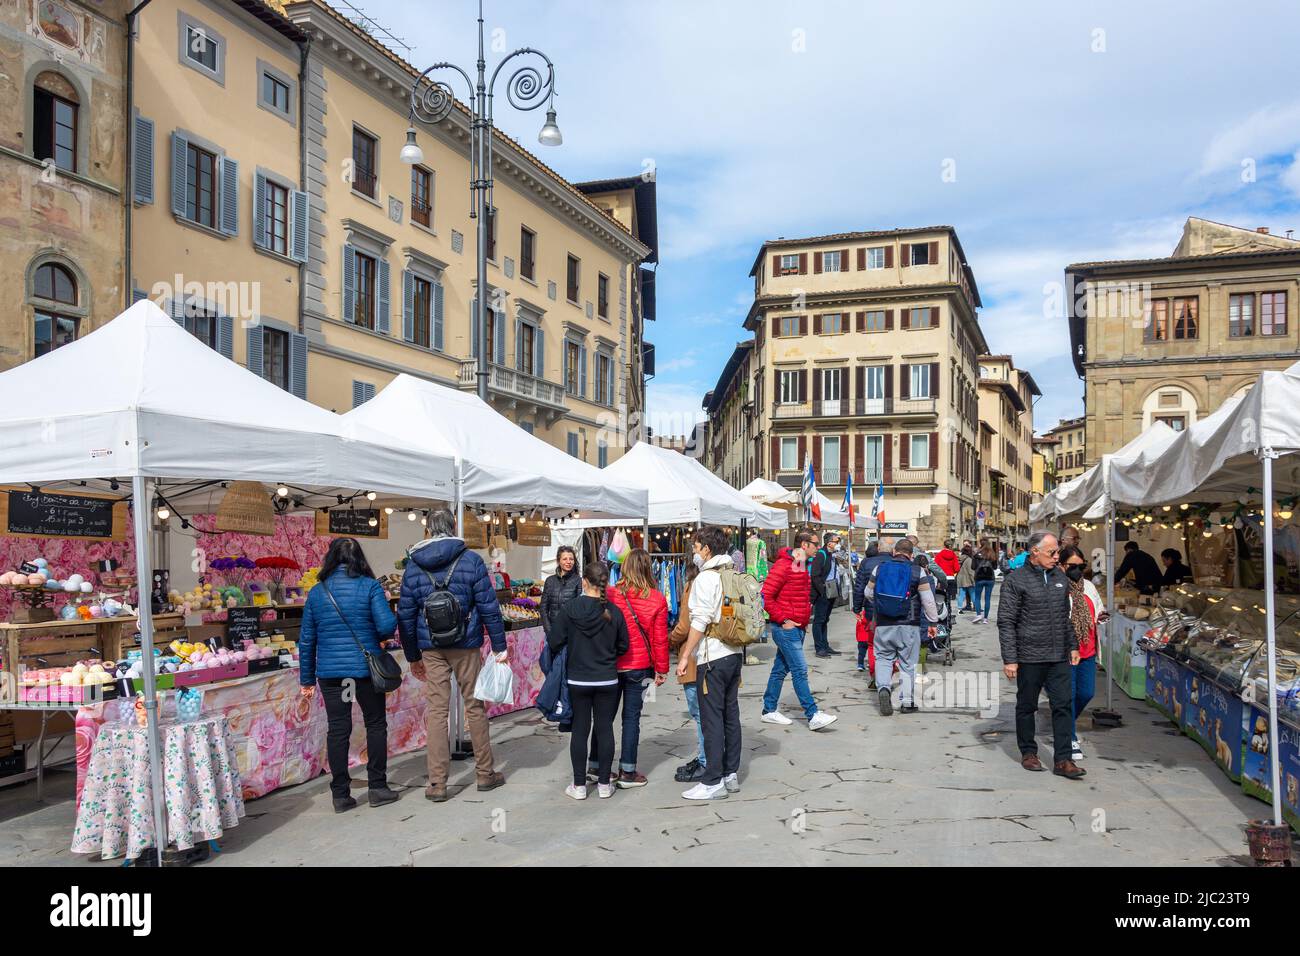 Outdooor market stalls, Piazza di Santa Croce, Florence (Firenze), Tuscany Region, Italy Stock Photo